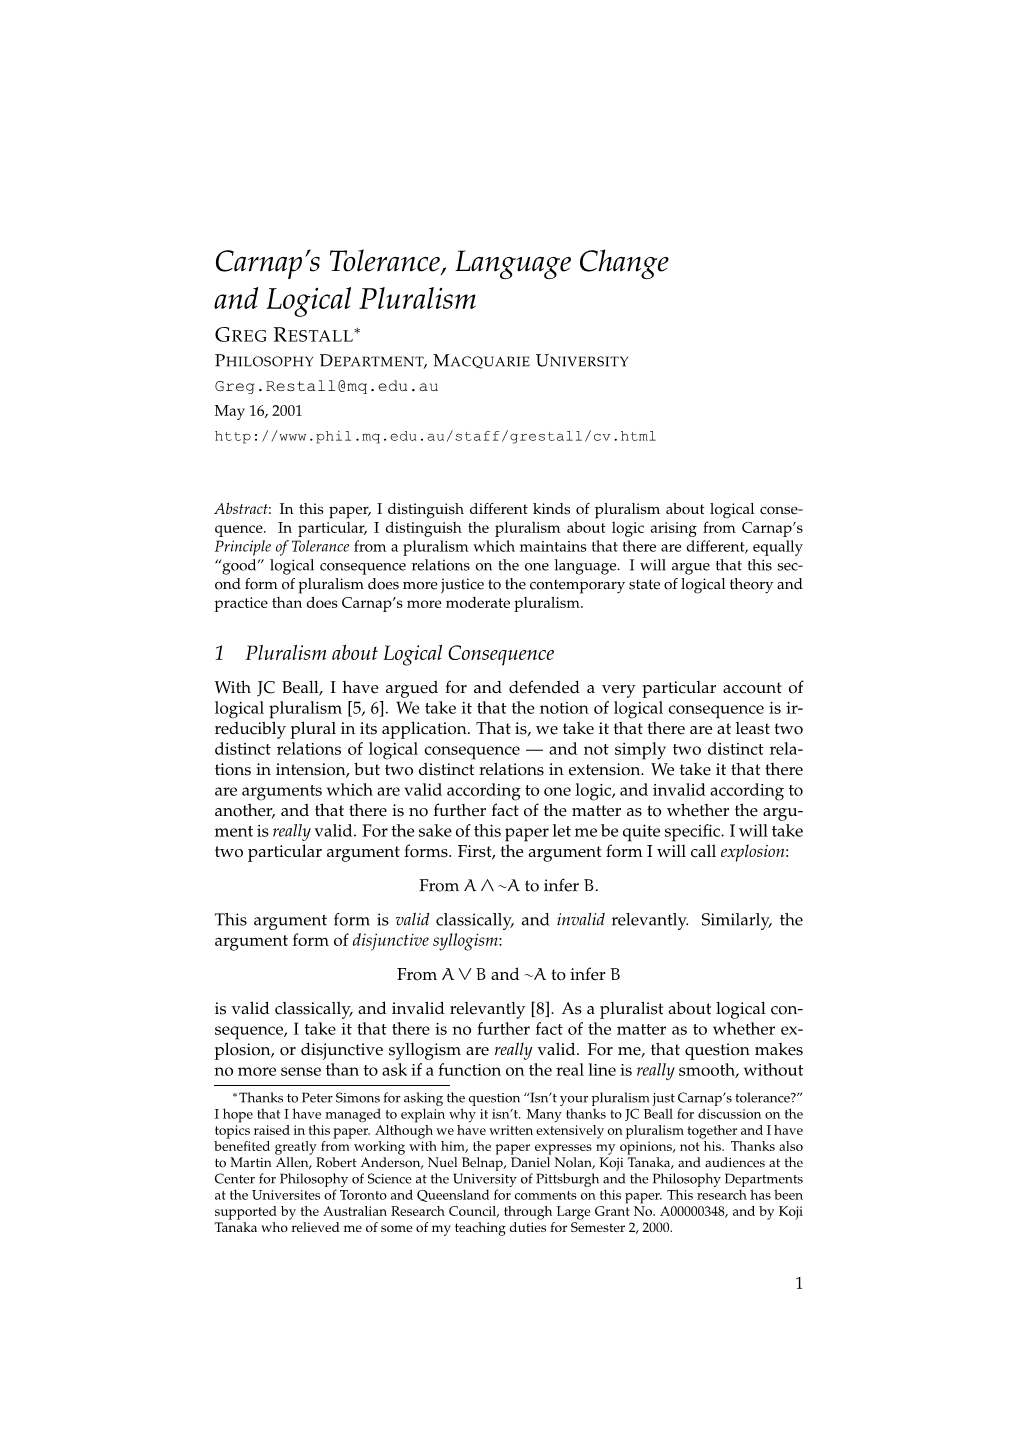 Carnap's Tolerance, Language Change and Logical Pluralism